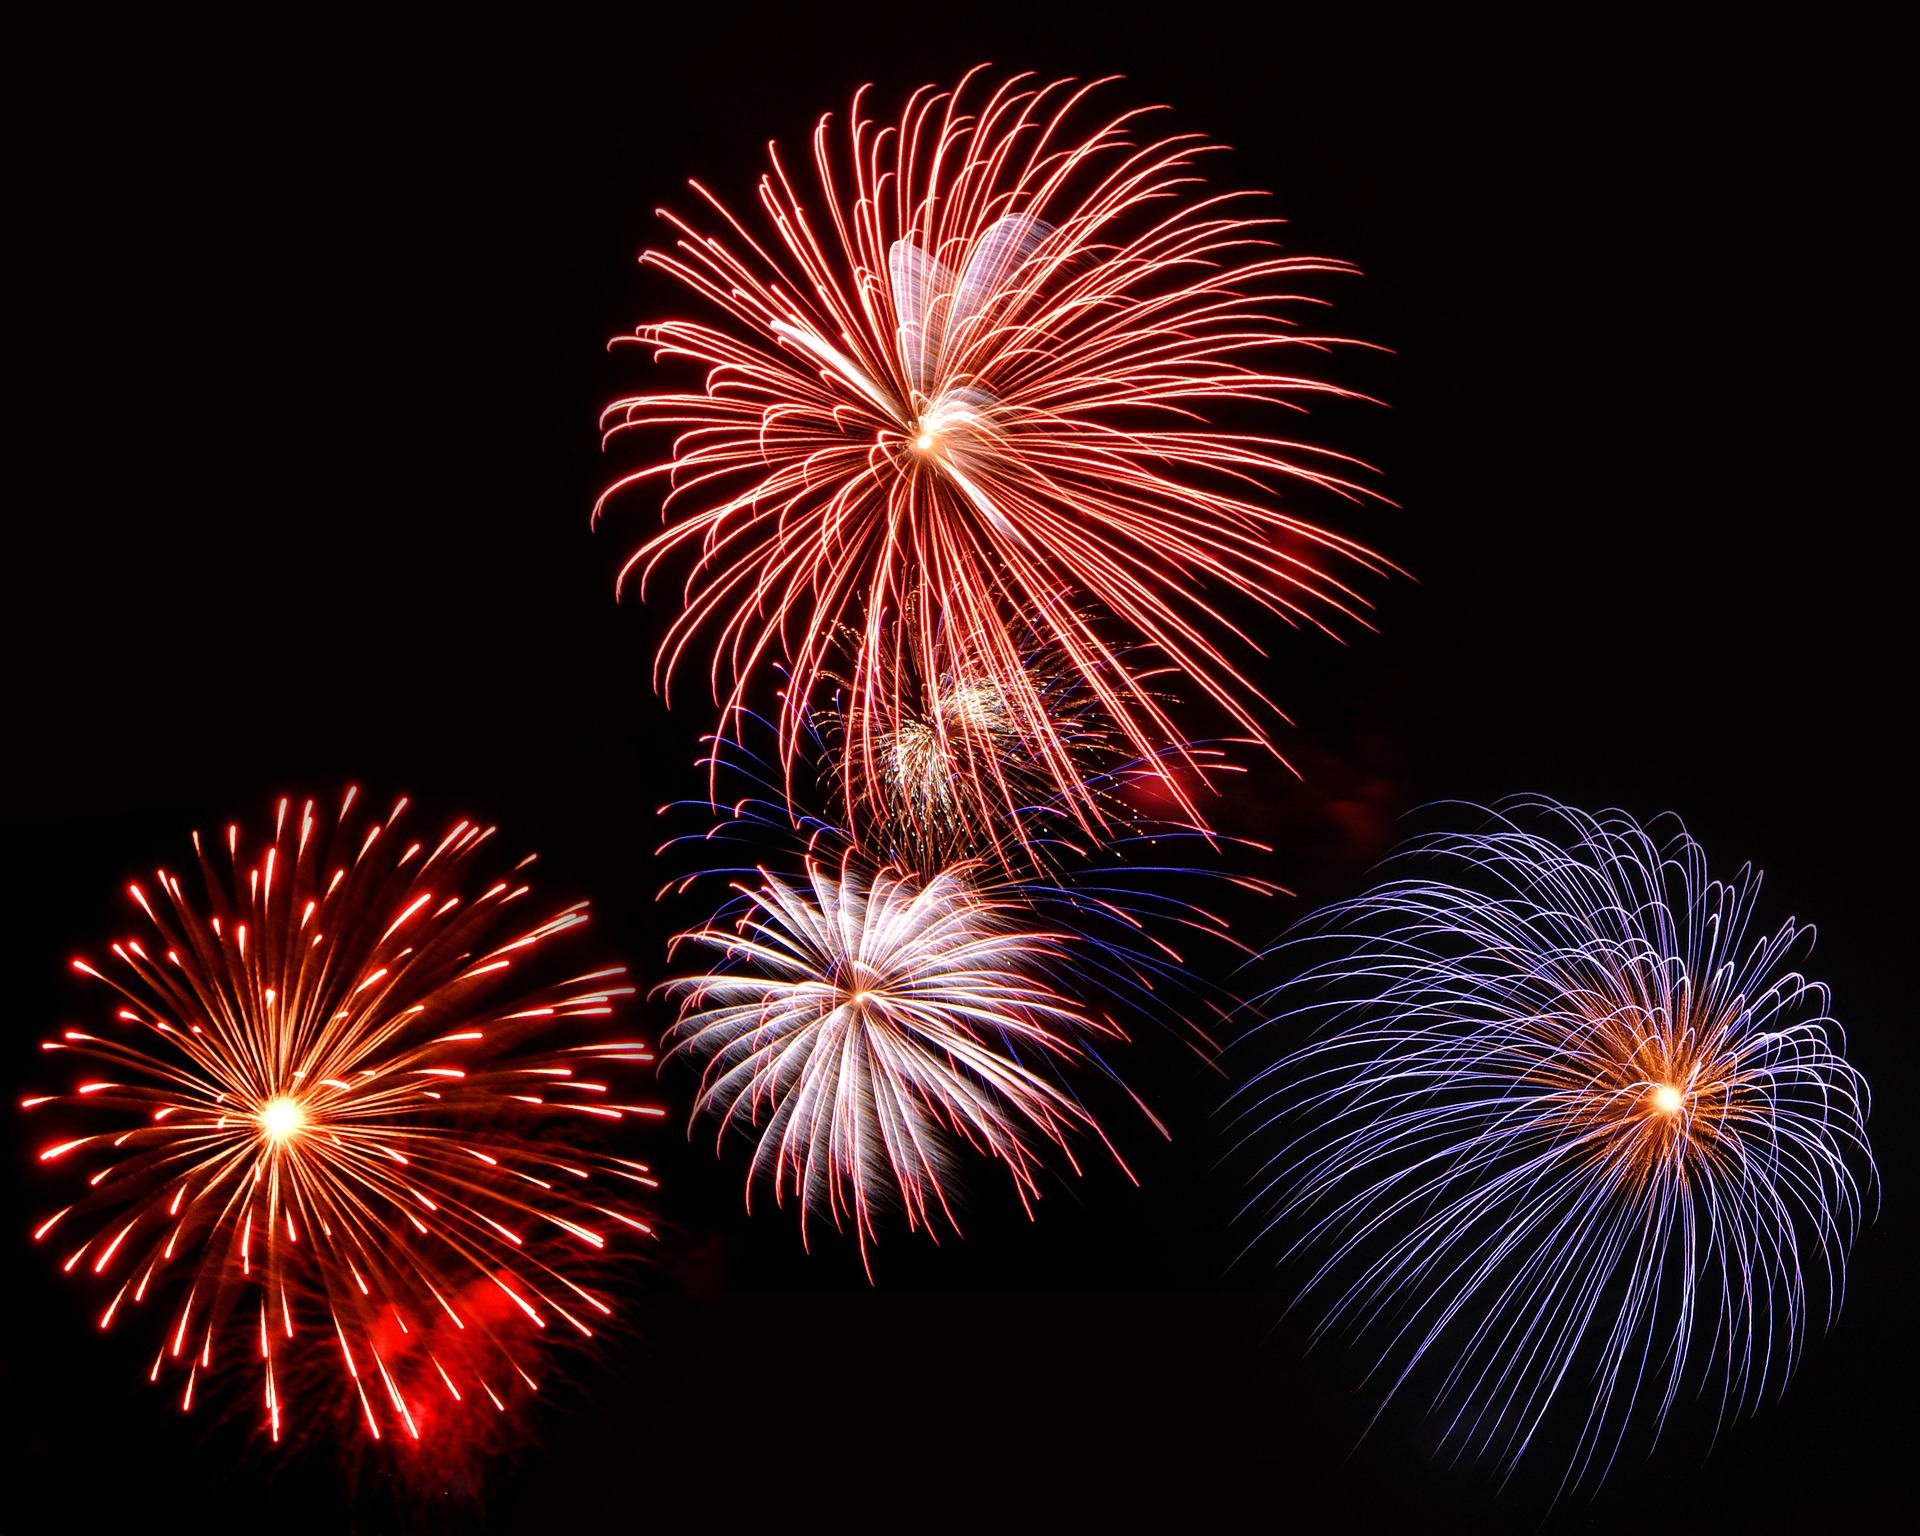 July 4th fireworks celebration